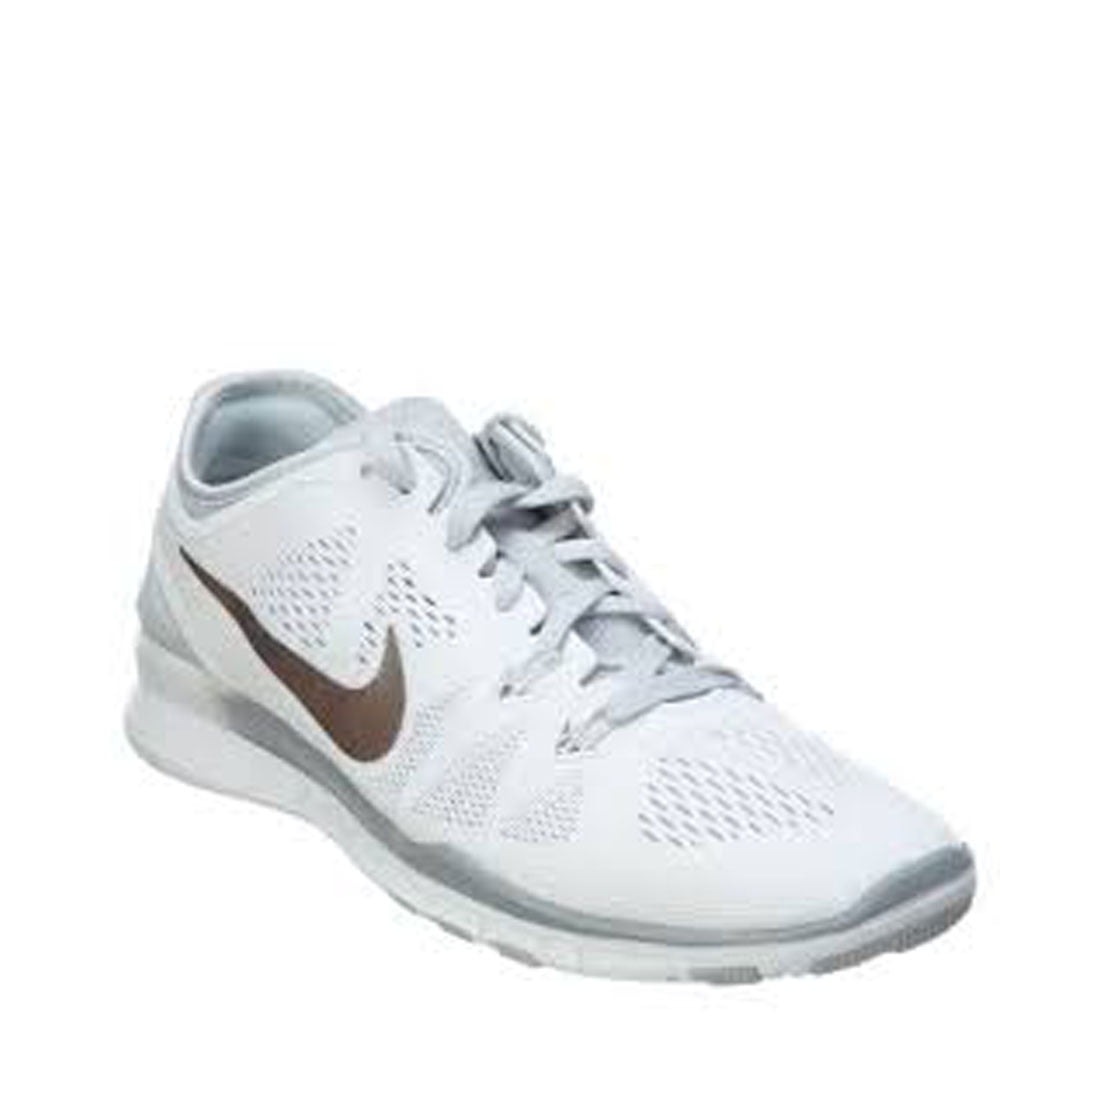 Nike Free 5.0 TR 5 White/Metallic-Silver 704674-100 Women's Size 11 Walmart.com